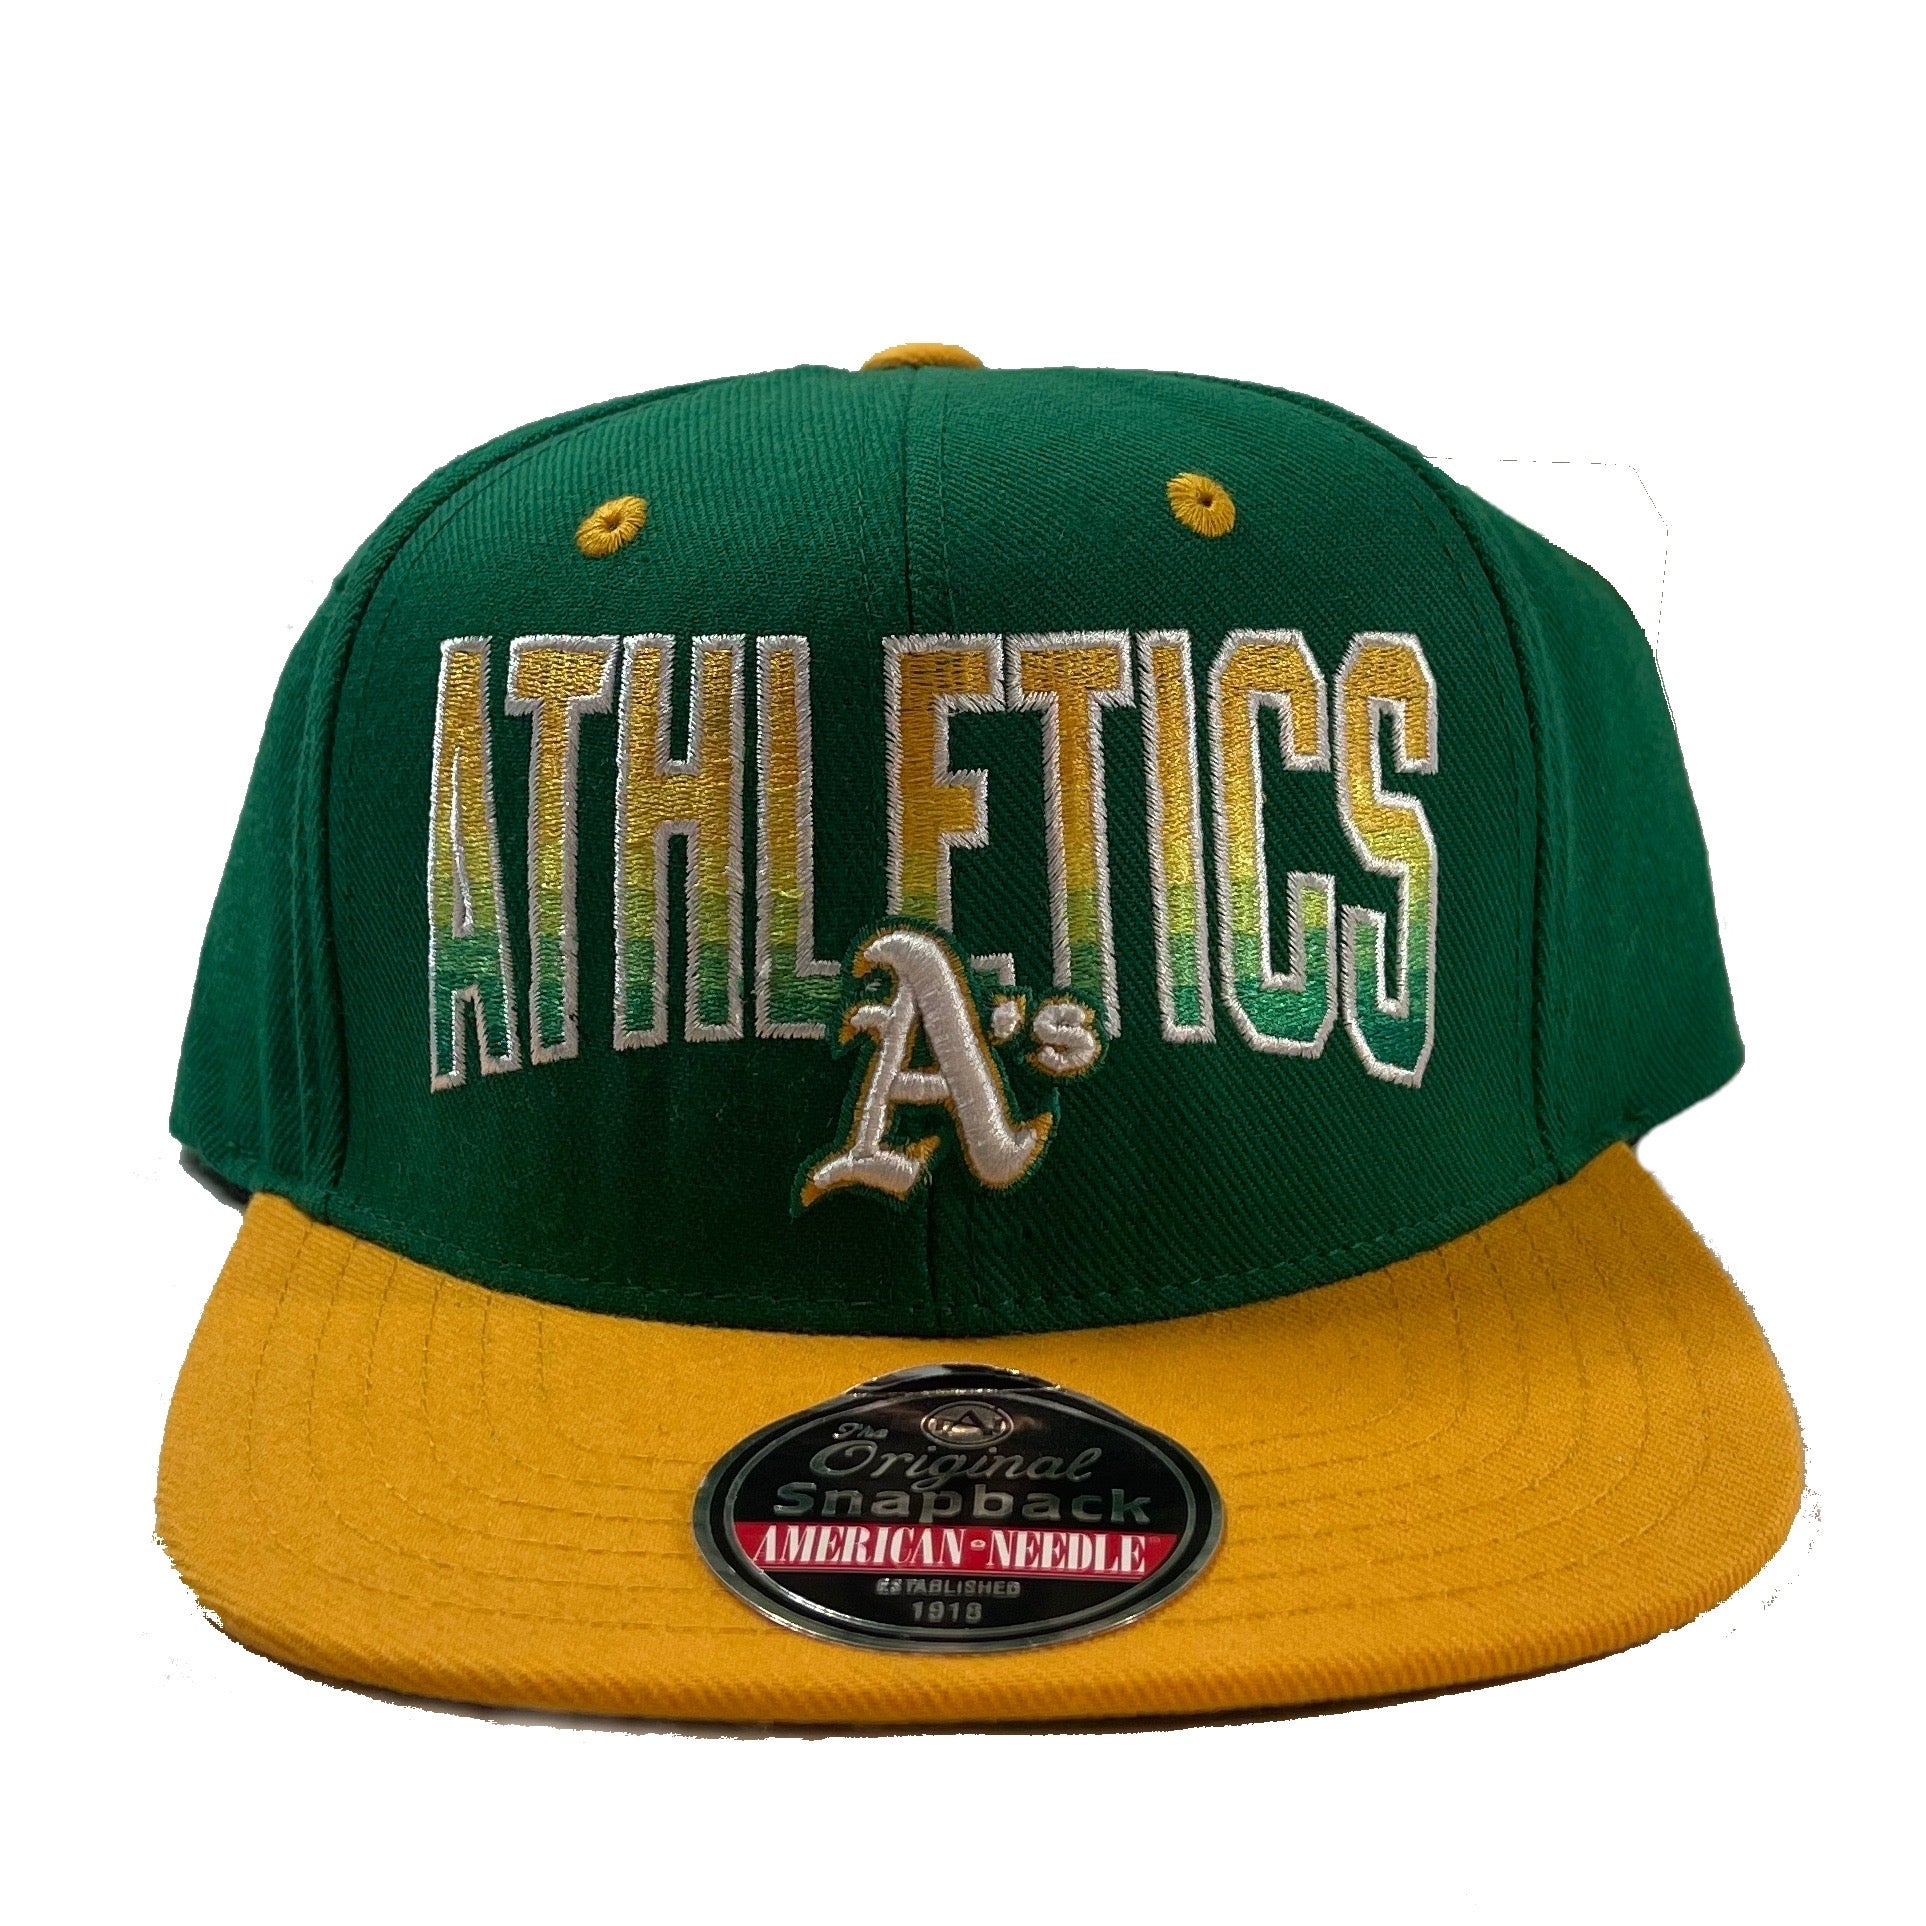 Vintage Oakland Athletics Hat Cap Snapback White Sports